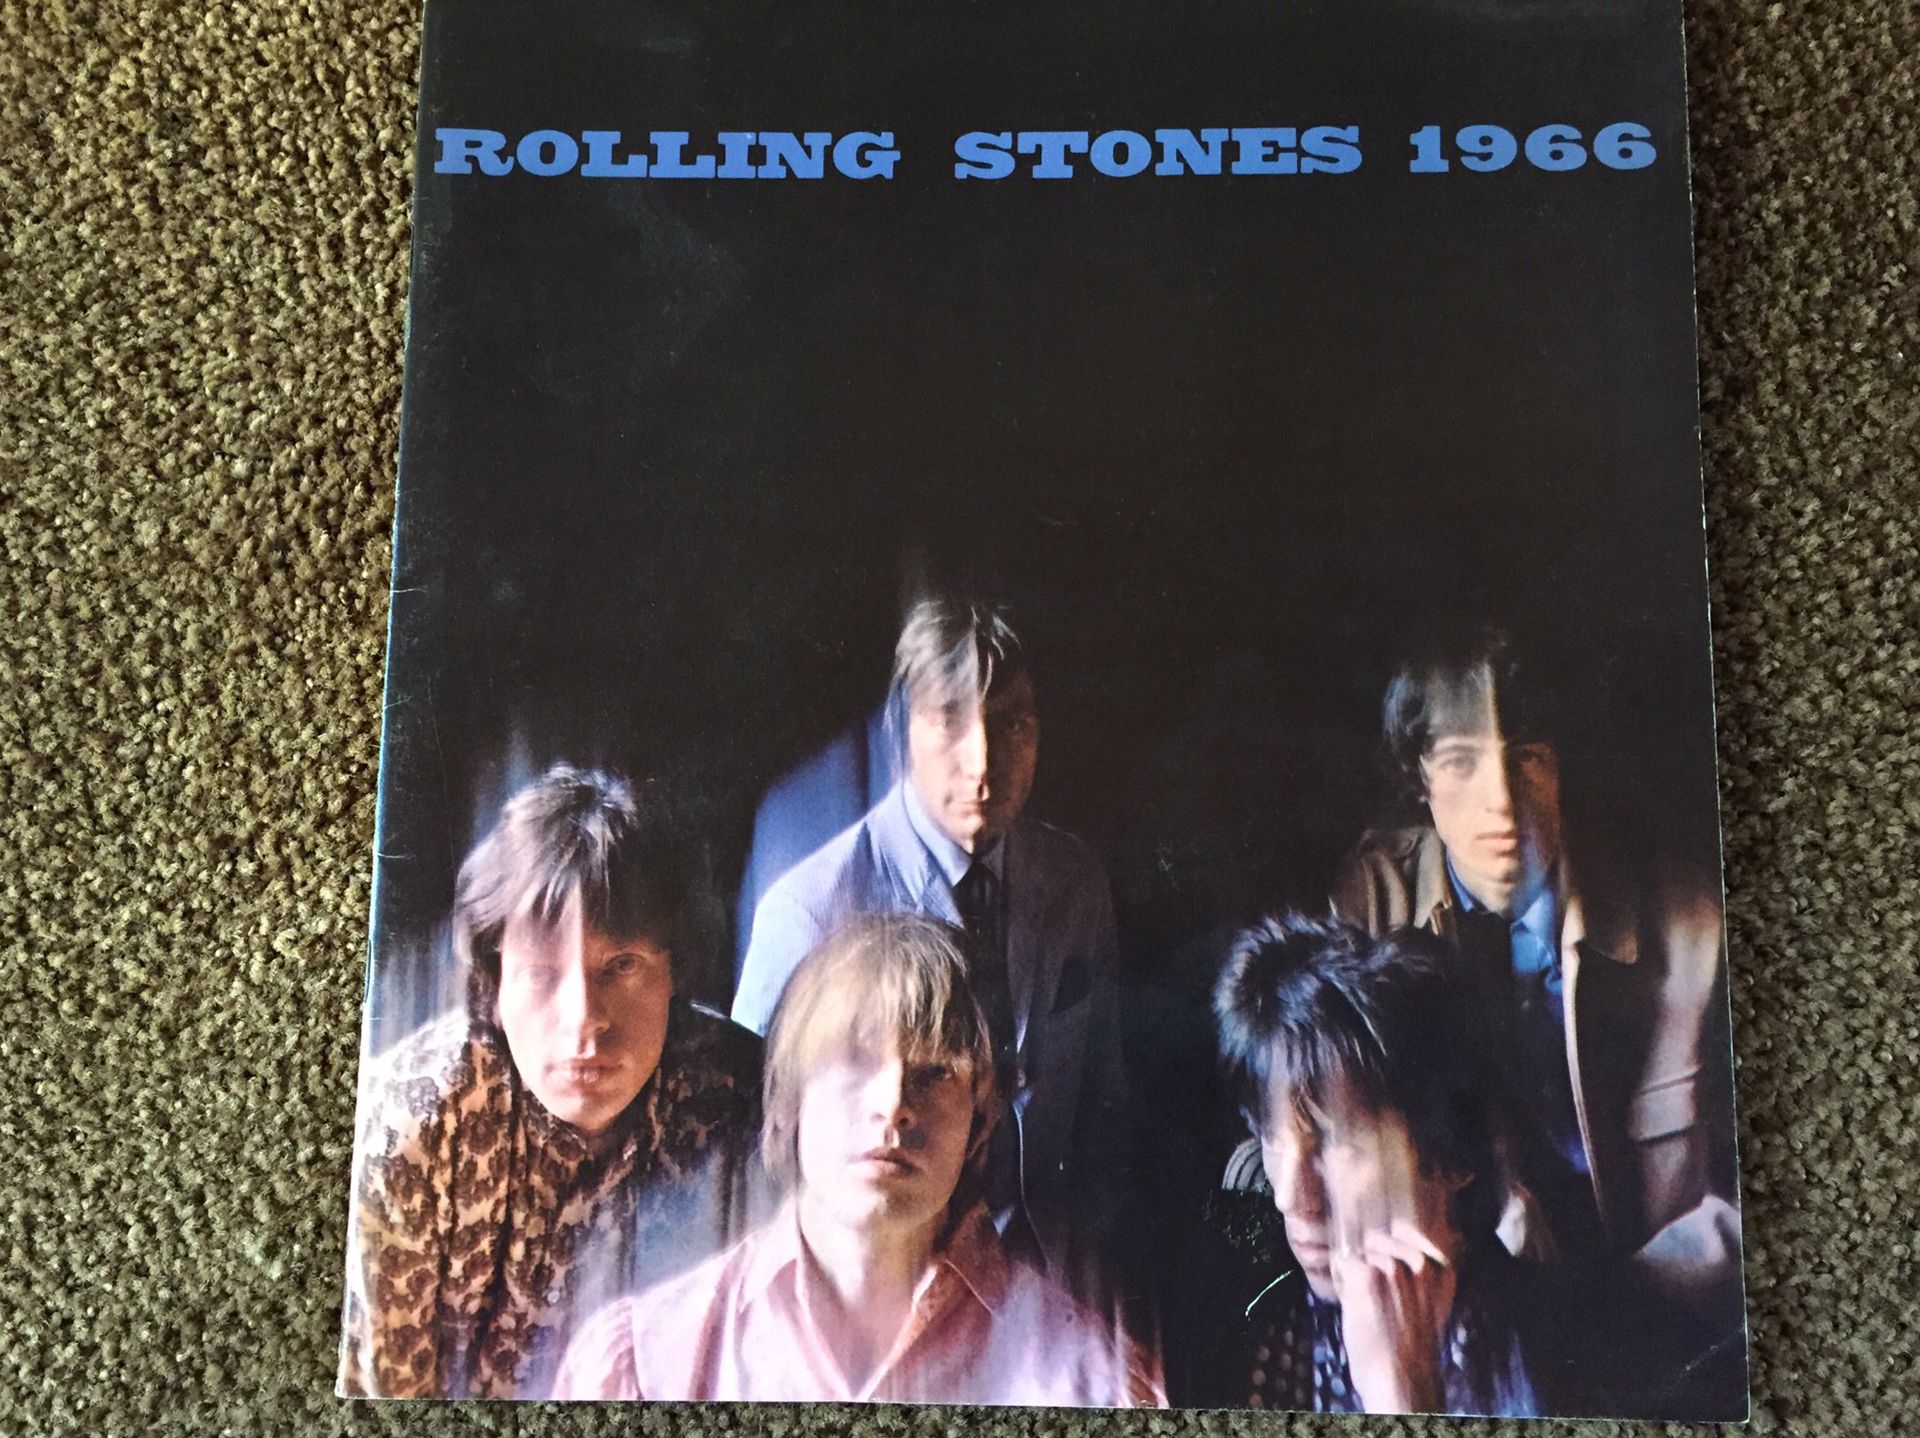 Rolling Stones 1966, Aftermath US concert program